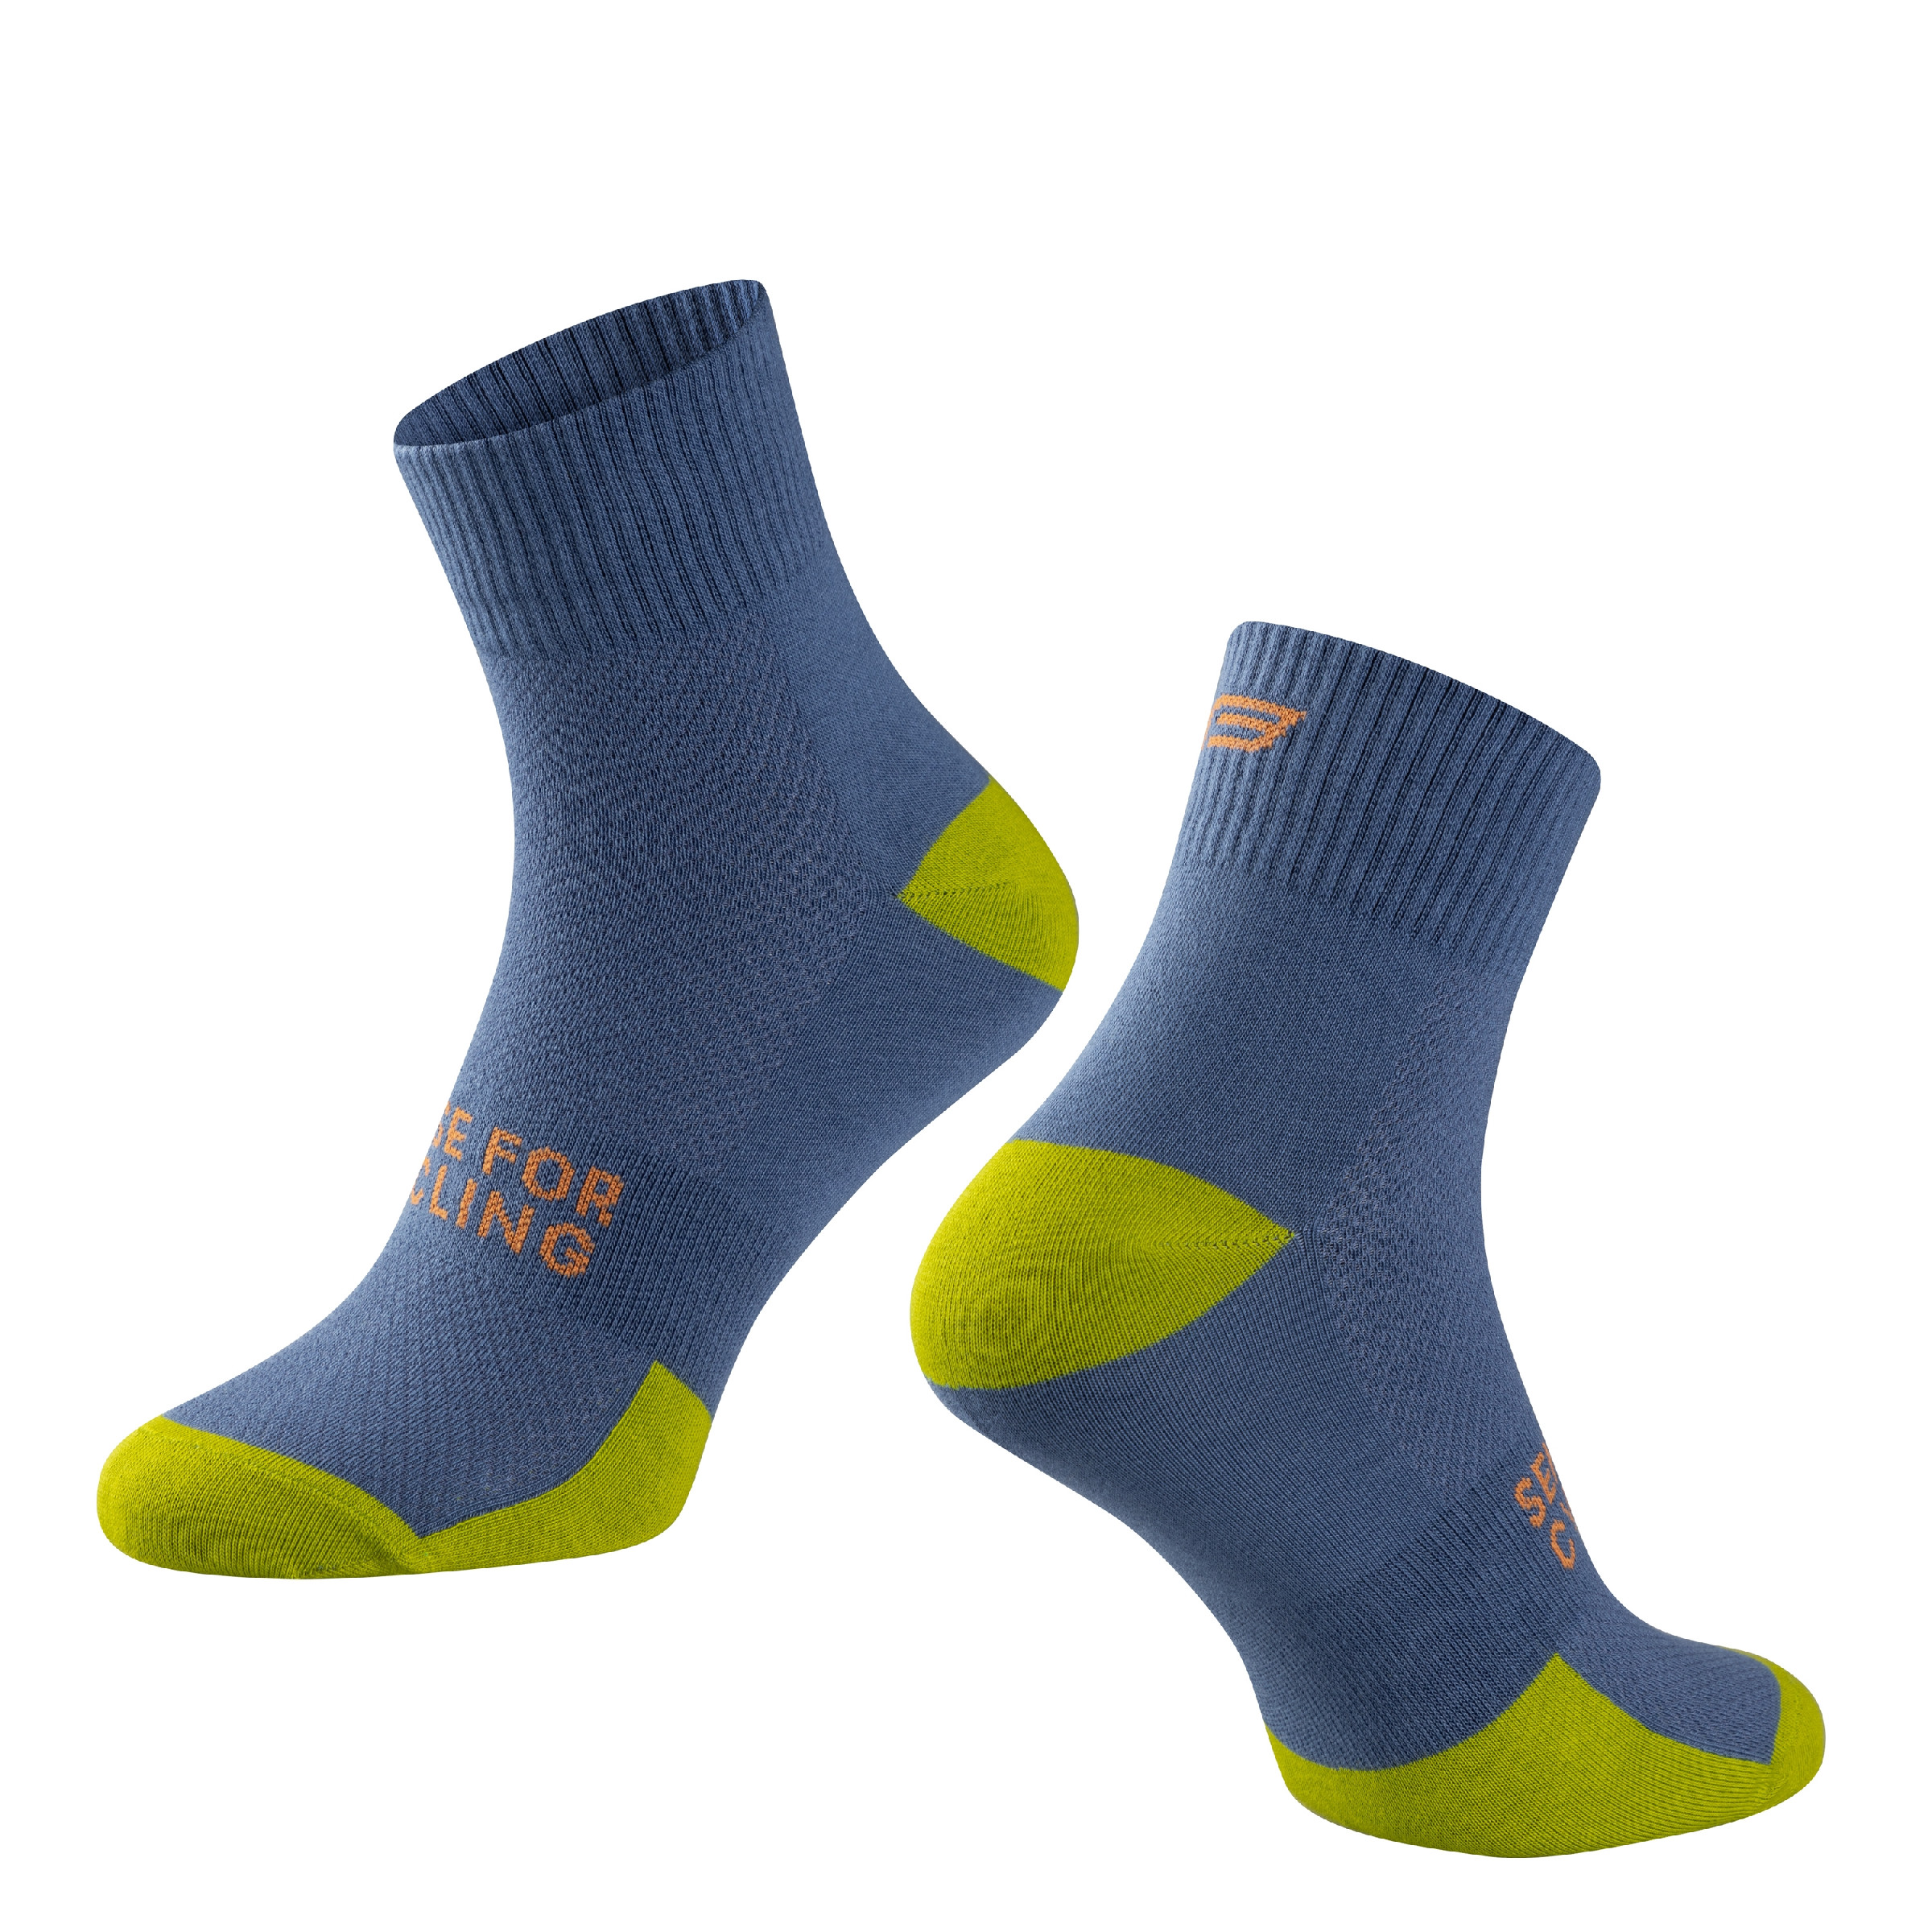 ponožky FORCE EDGE, modro-zelené S-M/36-41 Velikost: S-M